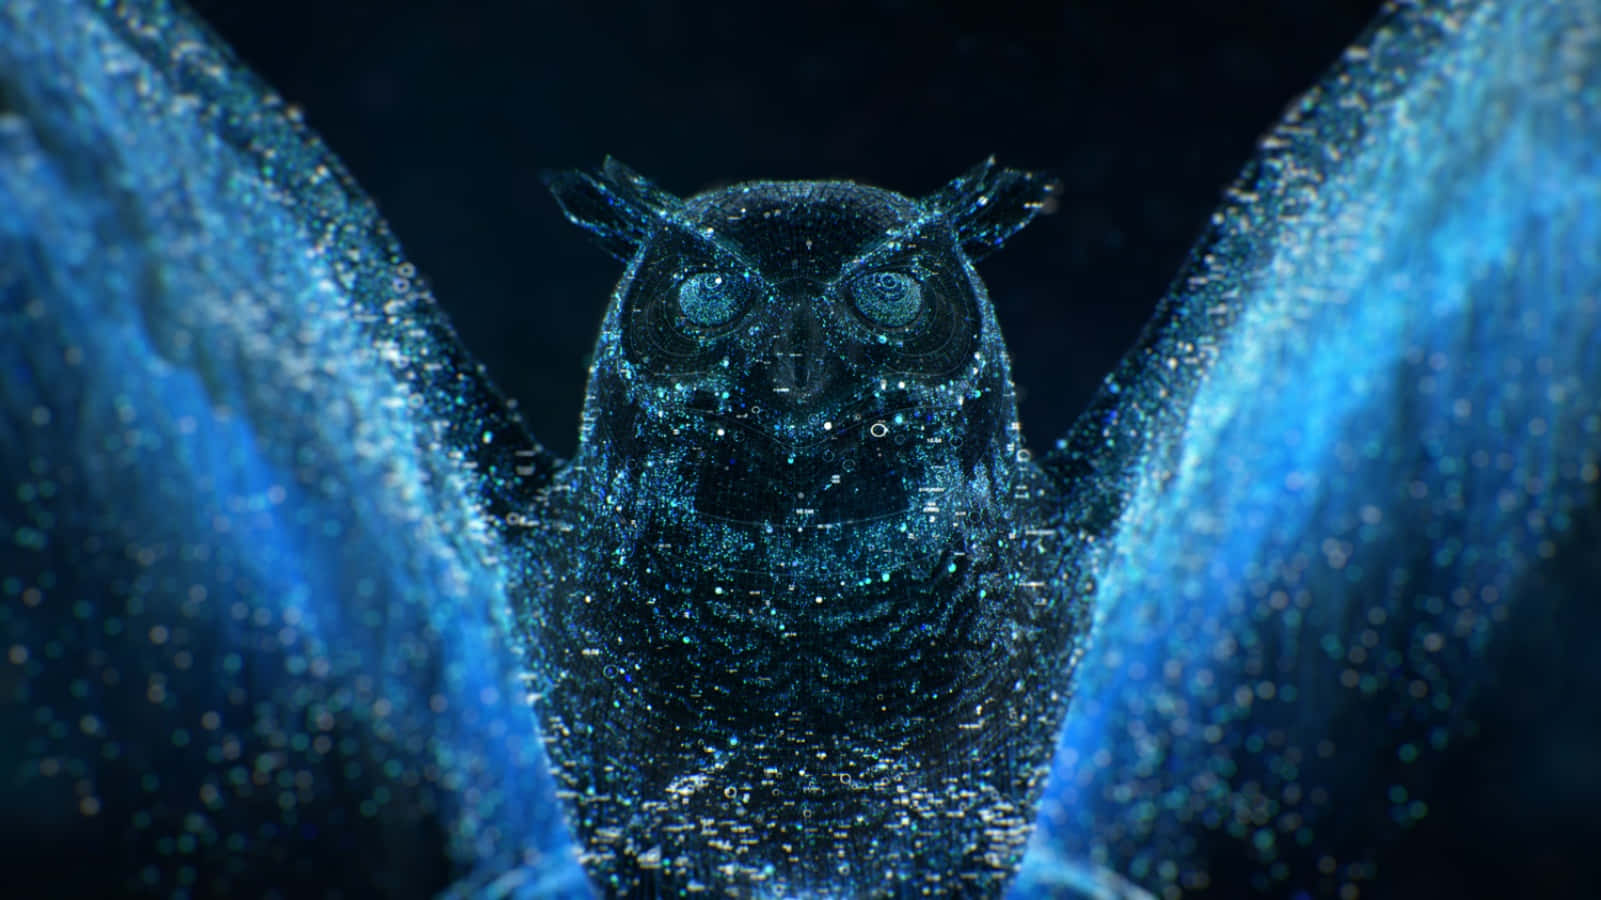 A beautiful fierce blue owl's eyes watching for prey